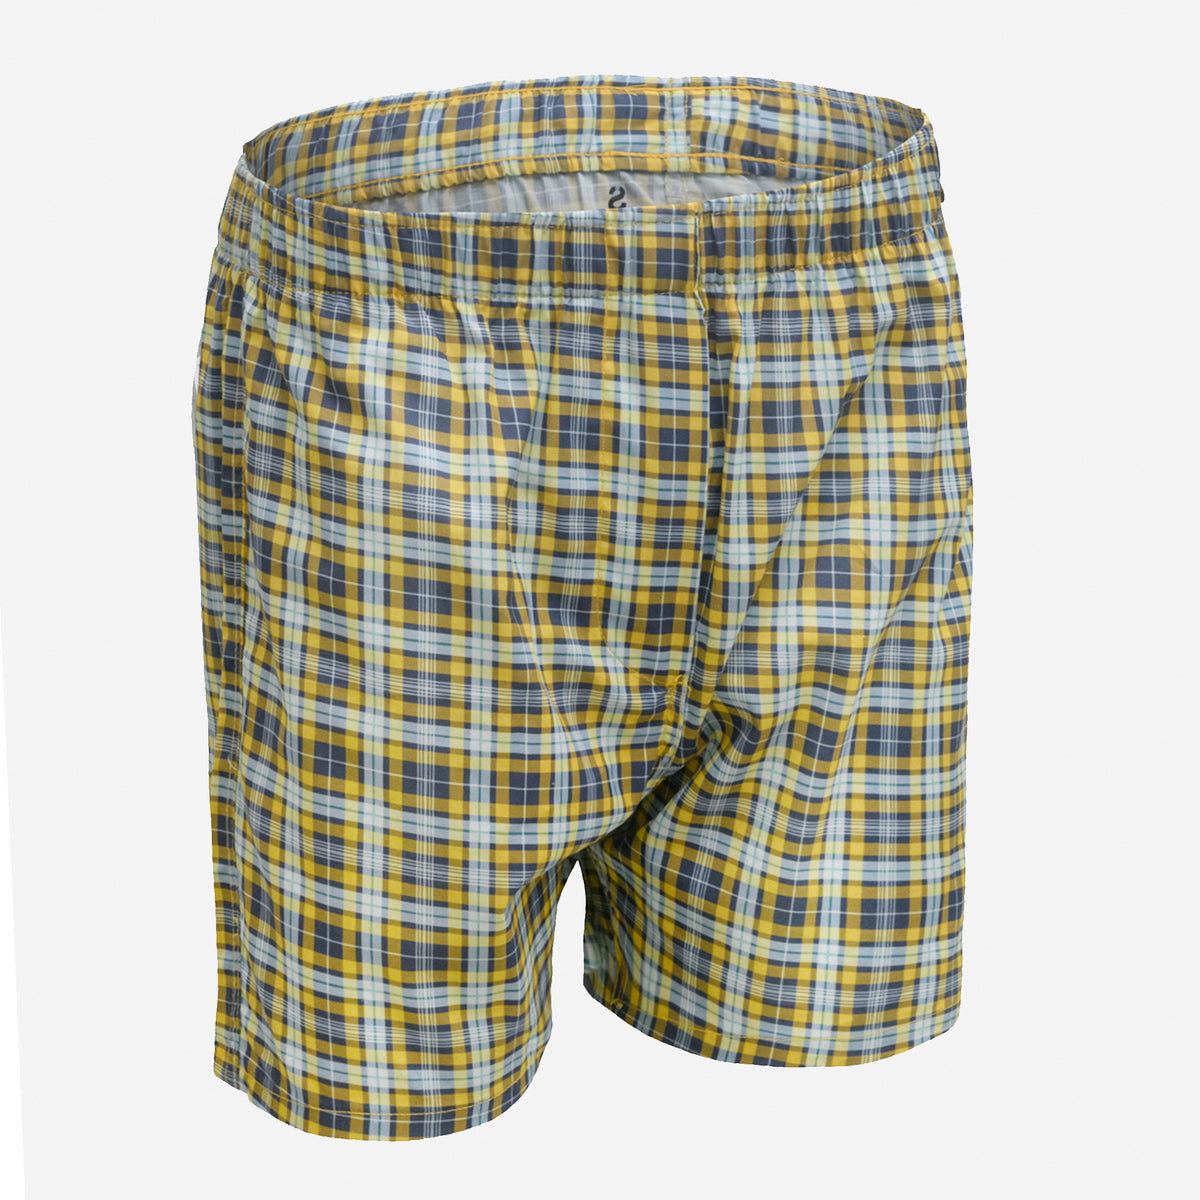 Men's 100% Cotton Boxer Shorts Waistband Check Print Yellow